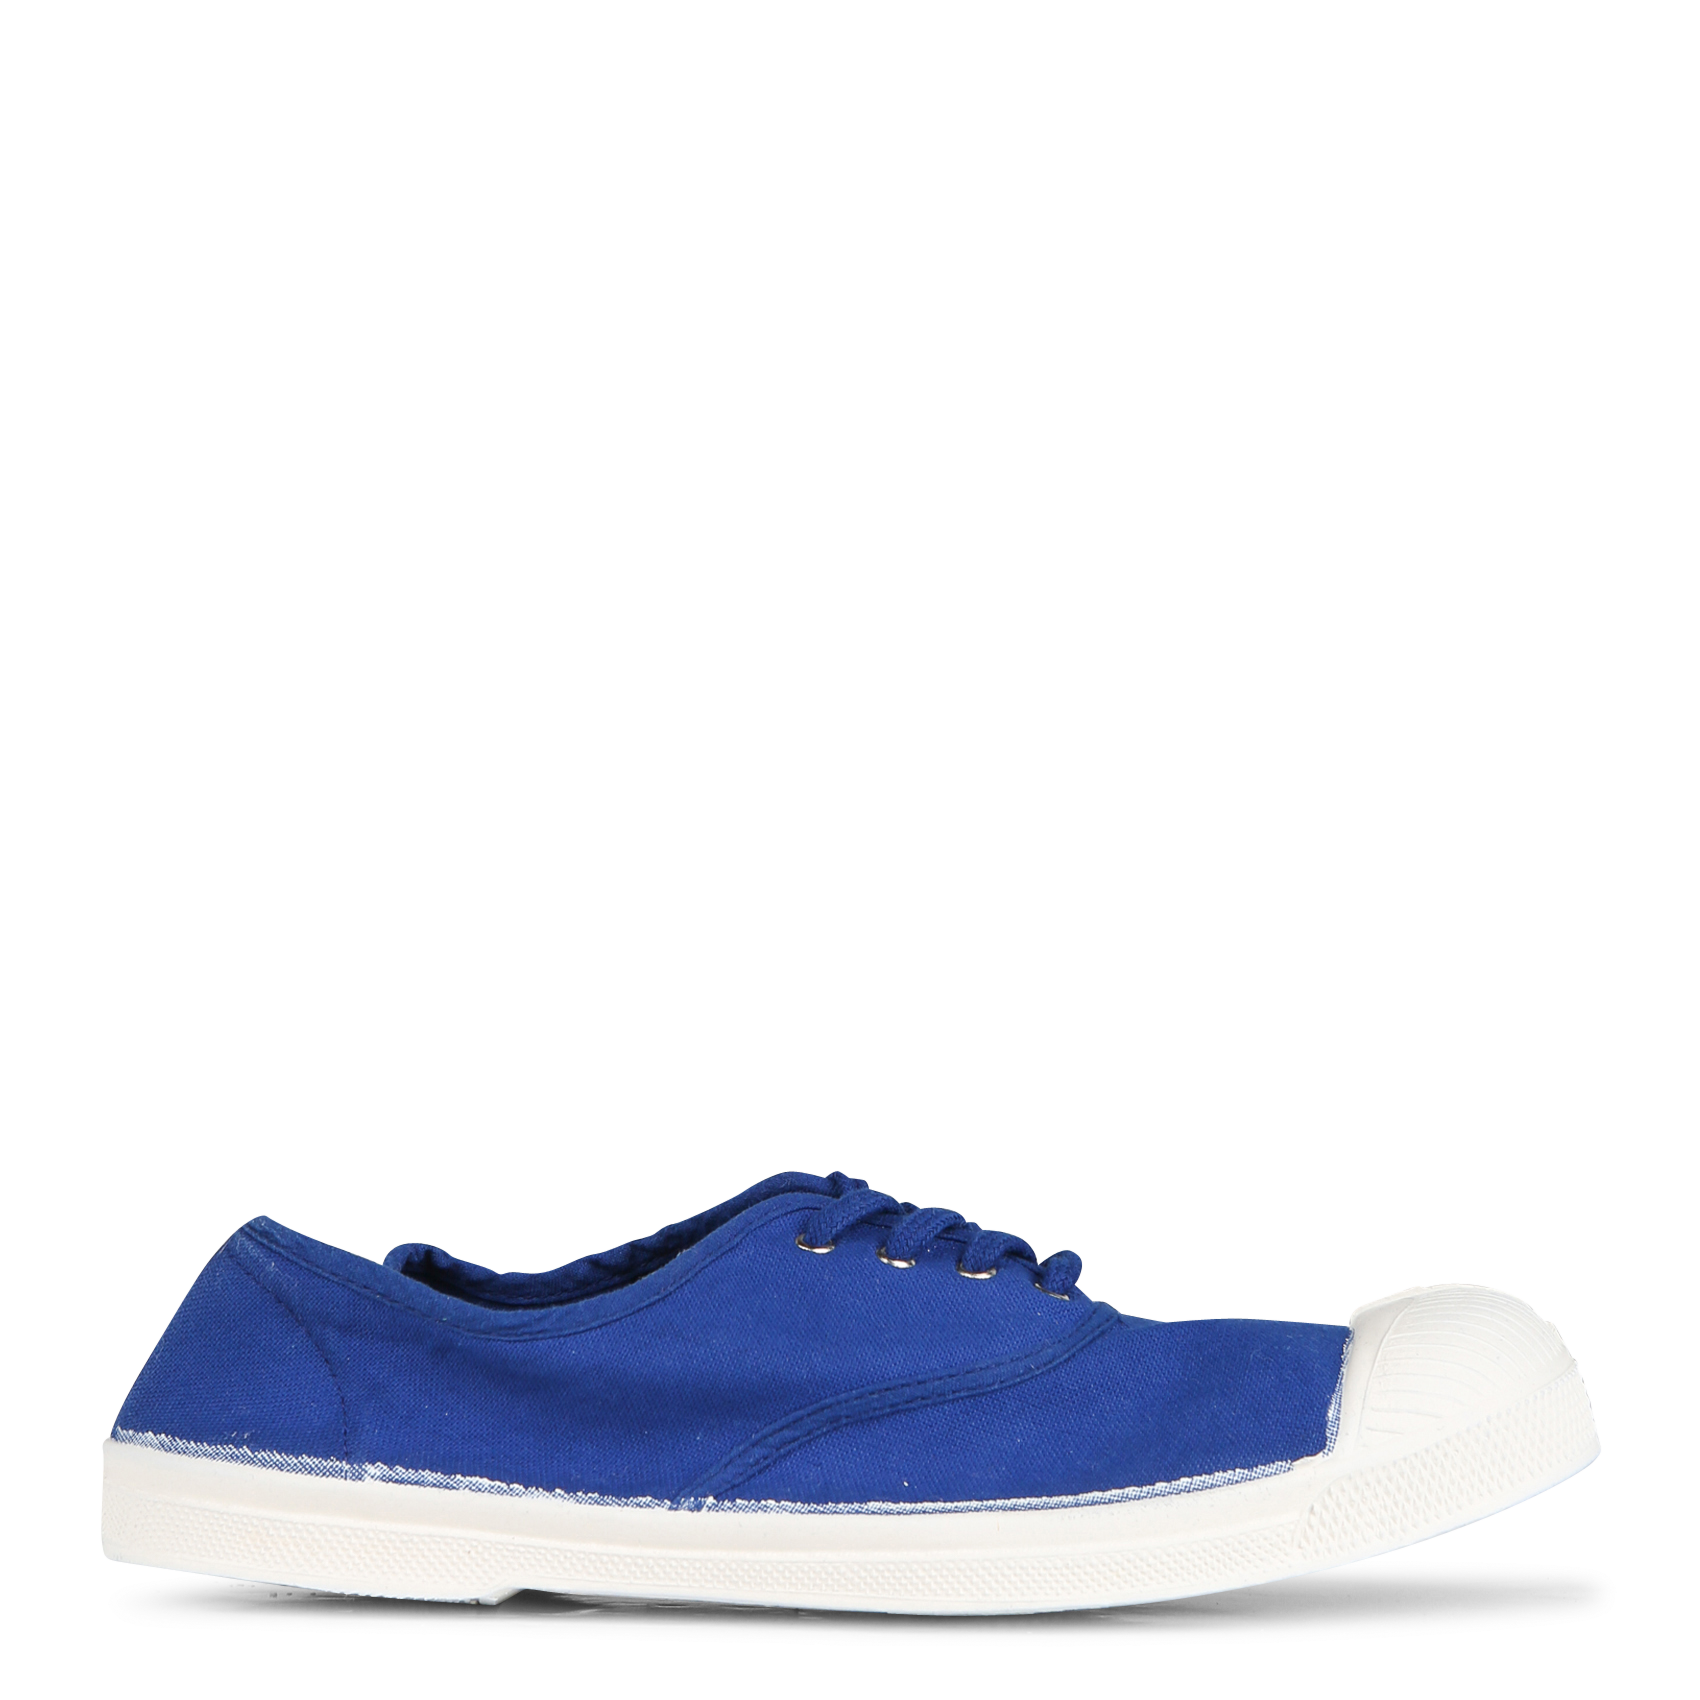 bensimon-electric-blue-lace-up-tennis-womens-shoes